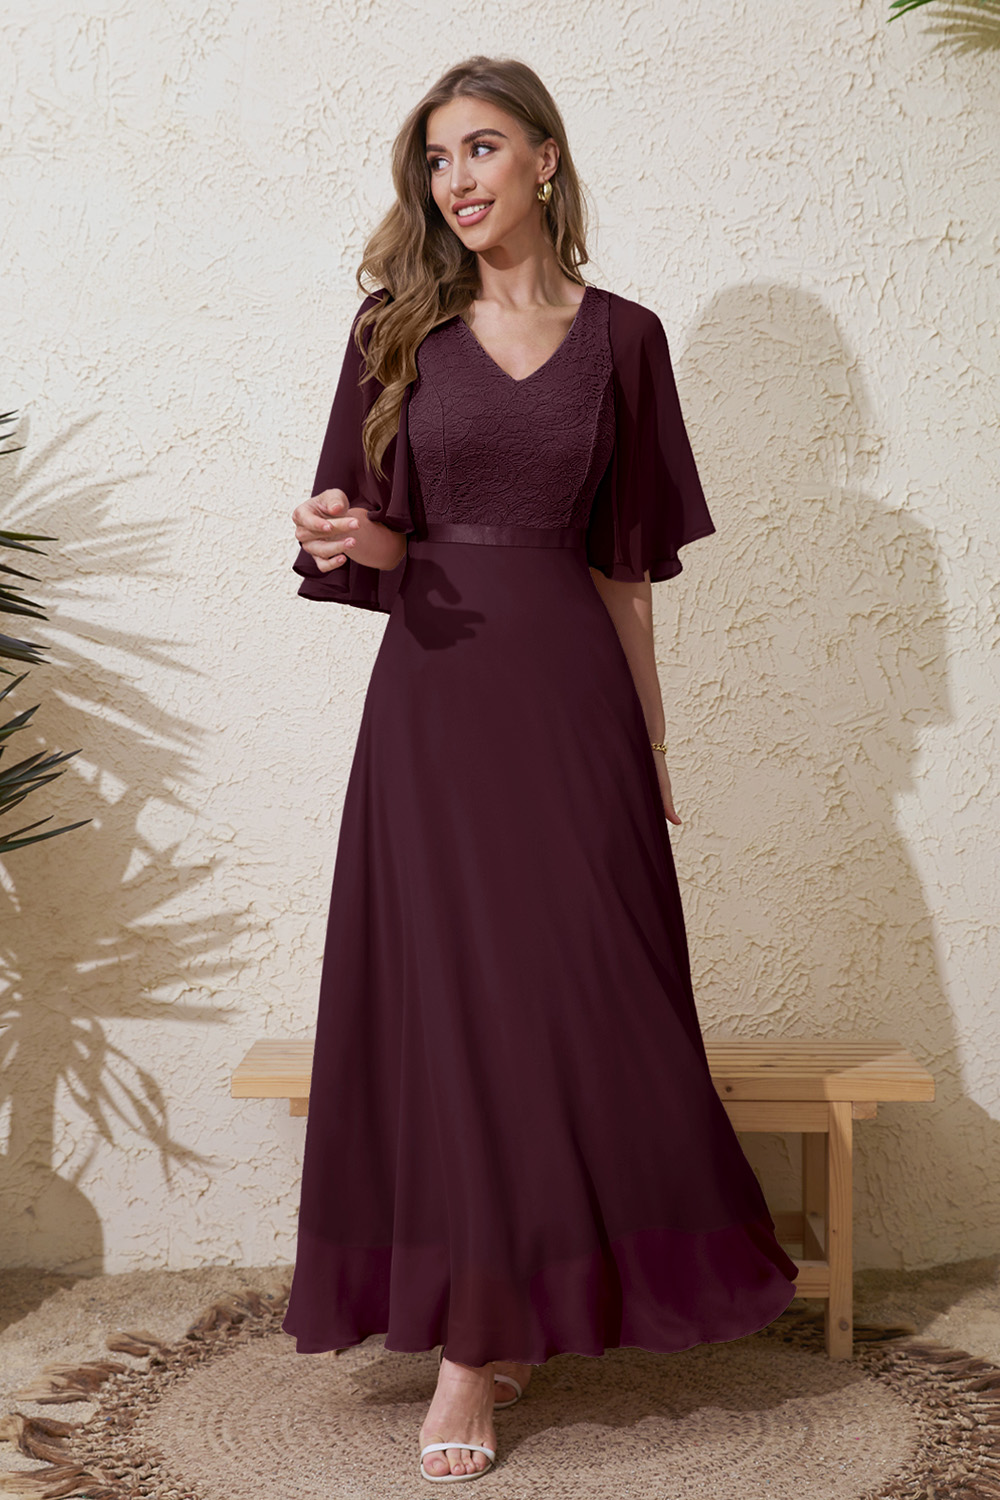 Elegant Burgundy V-Neck Chiffon Evening Gown for Formal Occasions